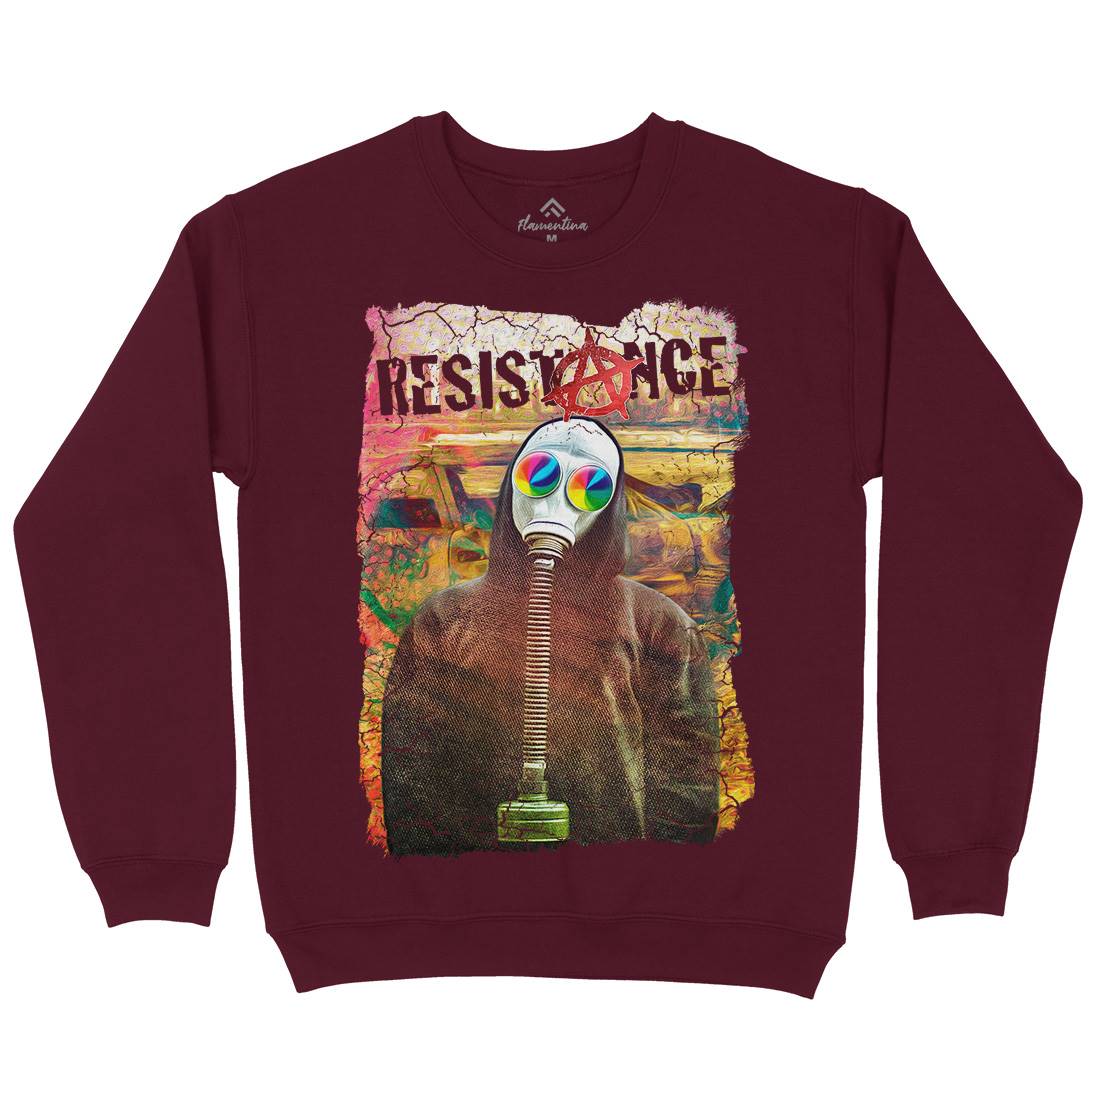 Resistance Kids Crew Neck Sweatshirt Illuminati A898